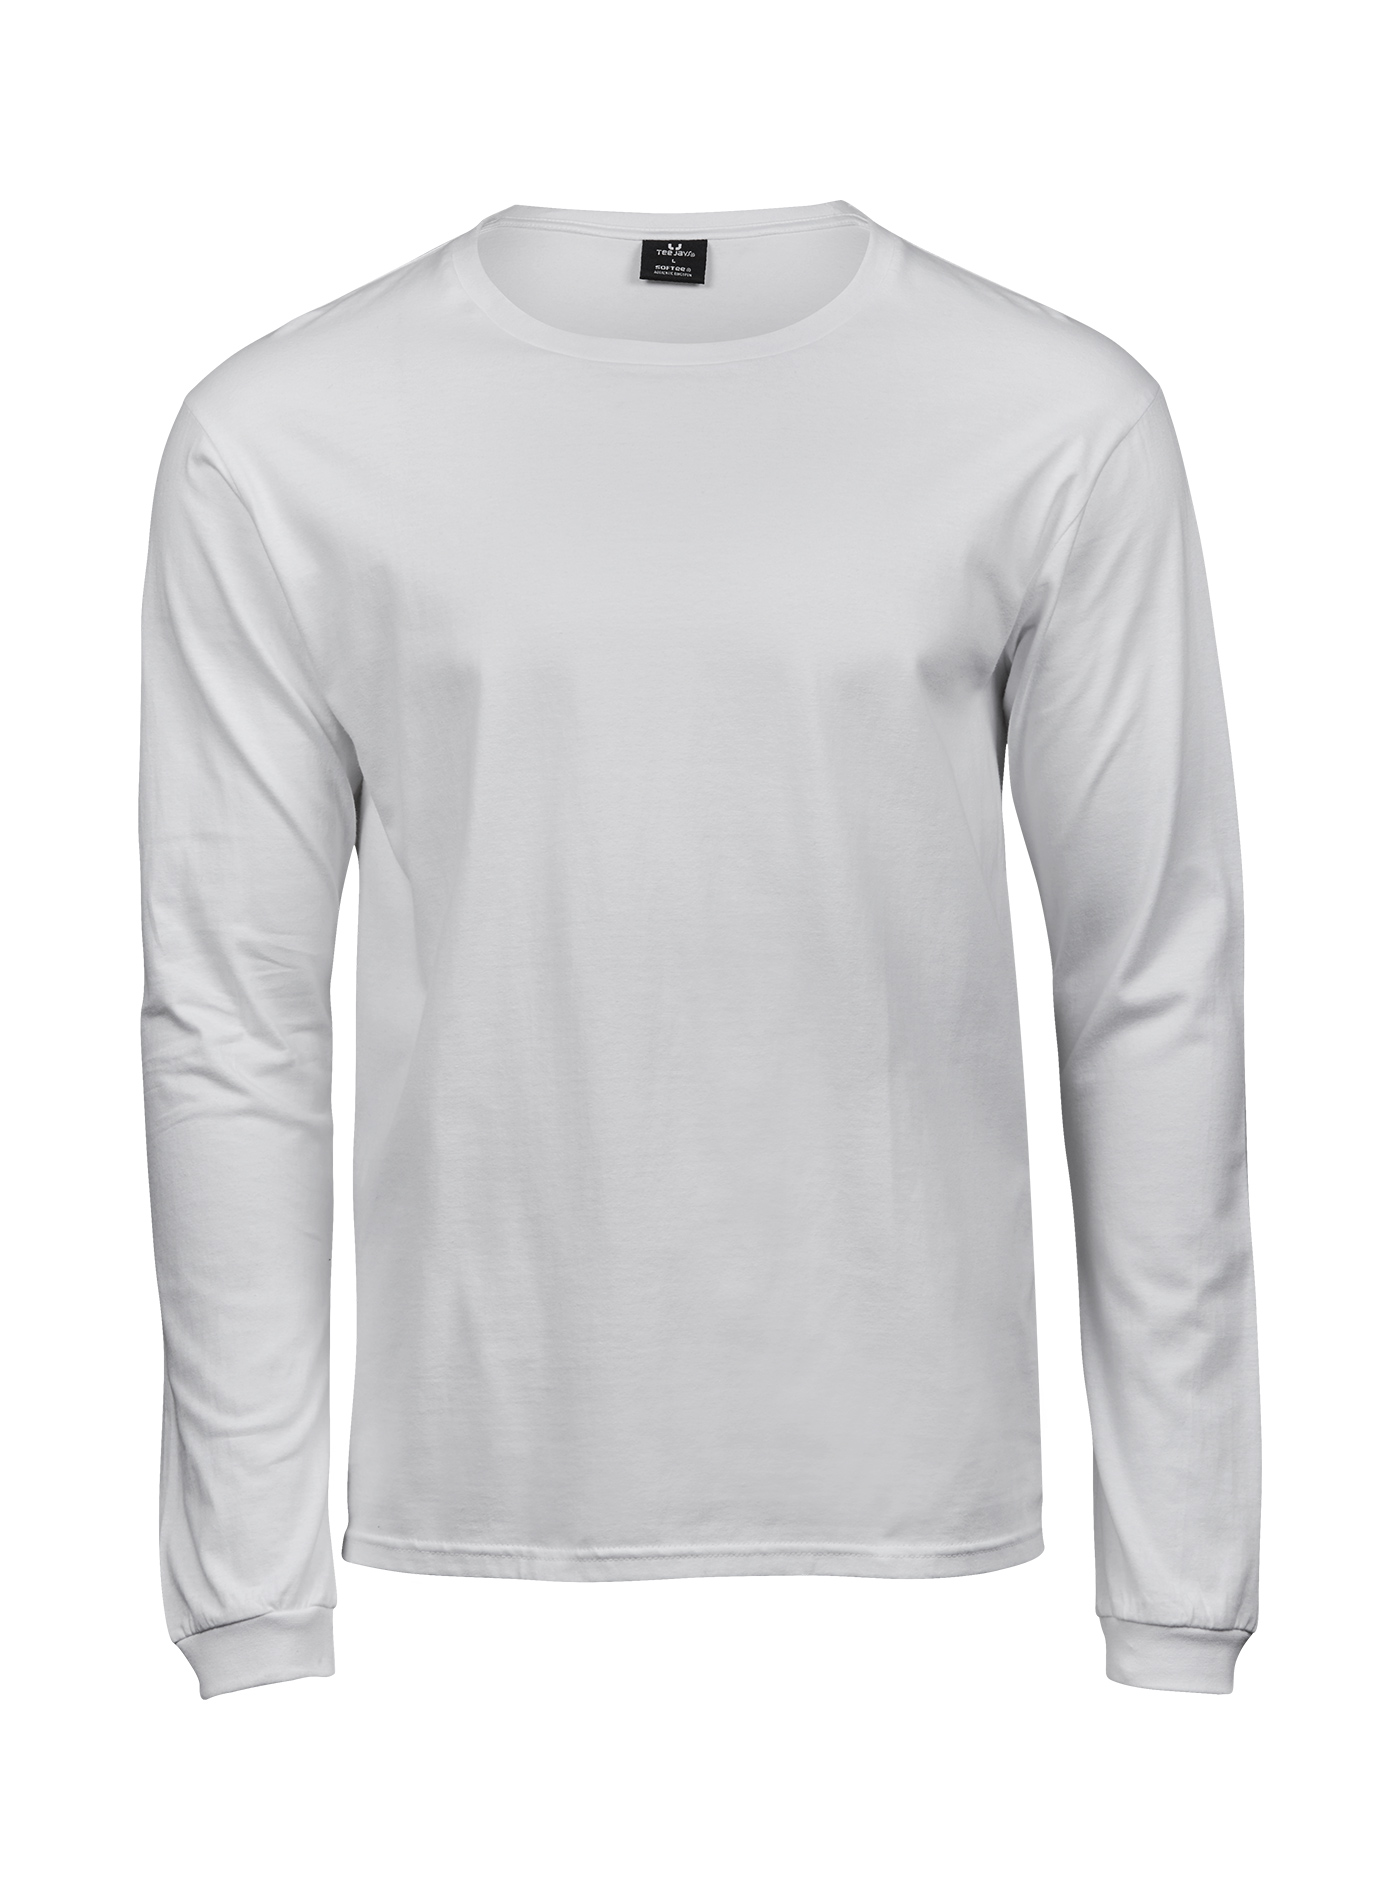 Pánské tričko s dlouhým rukávem Tee Jays Sof-Tee - Bílá S